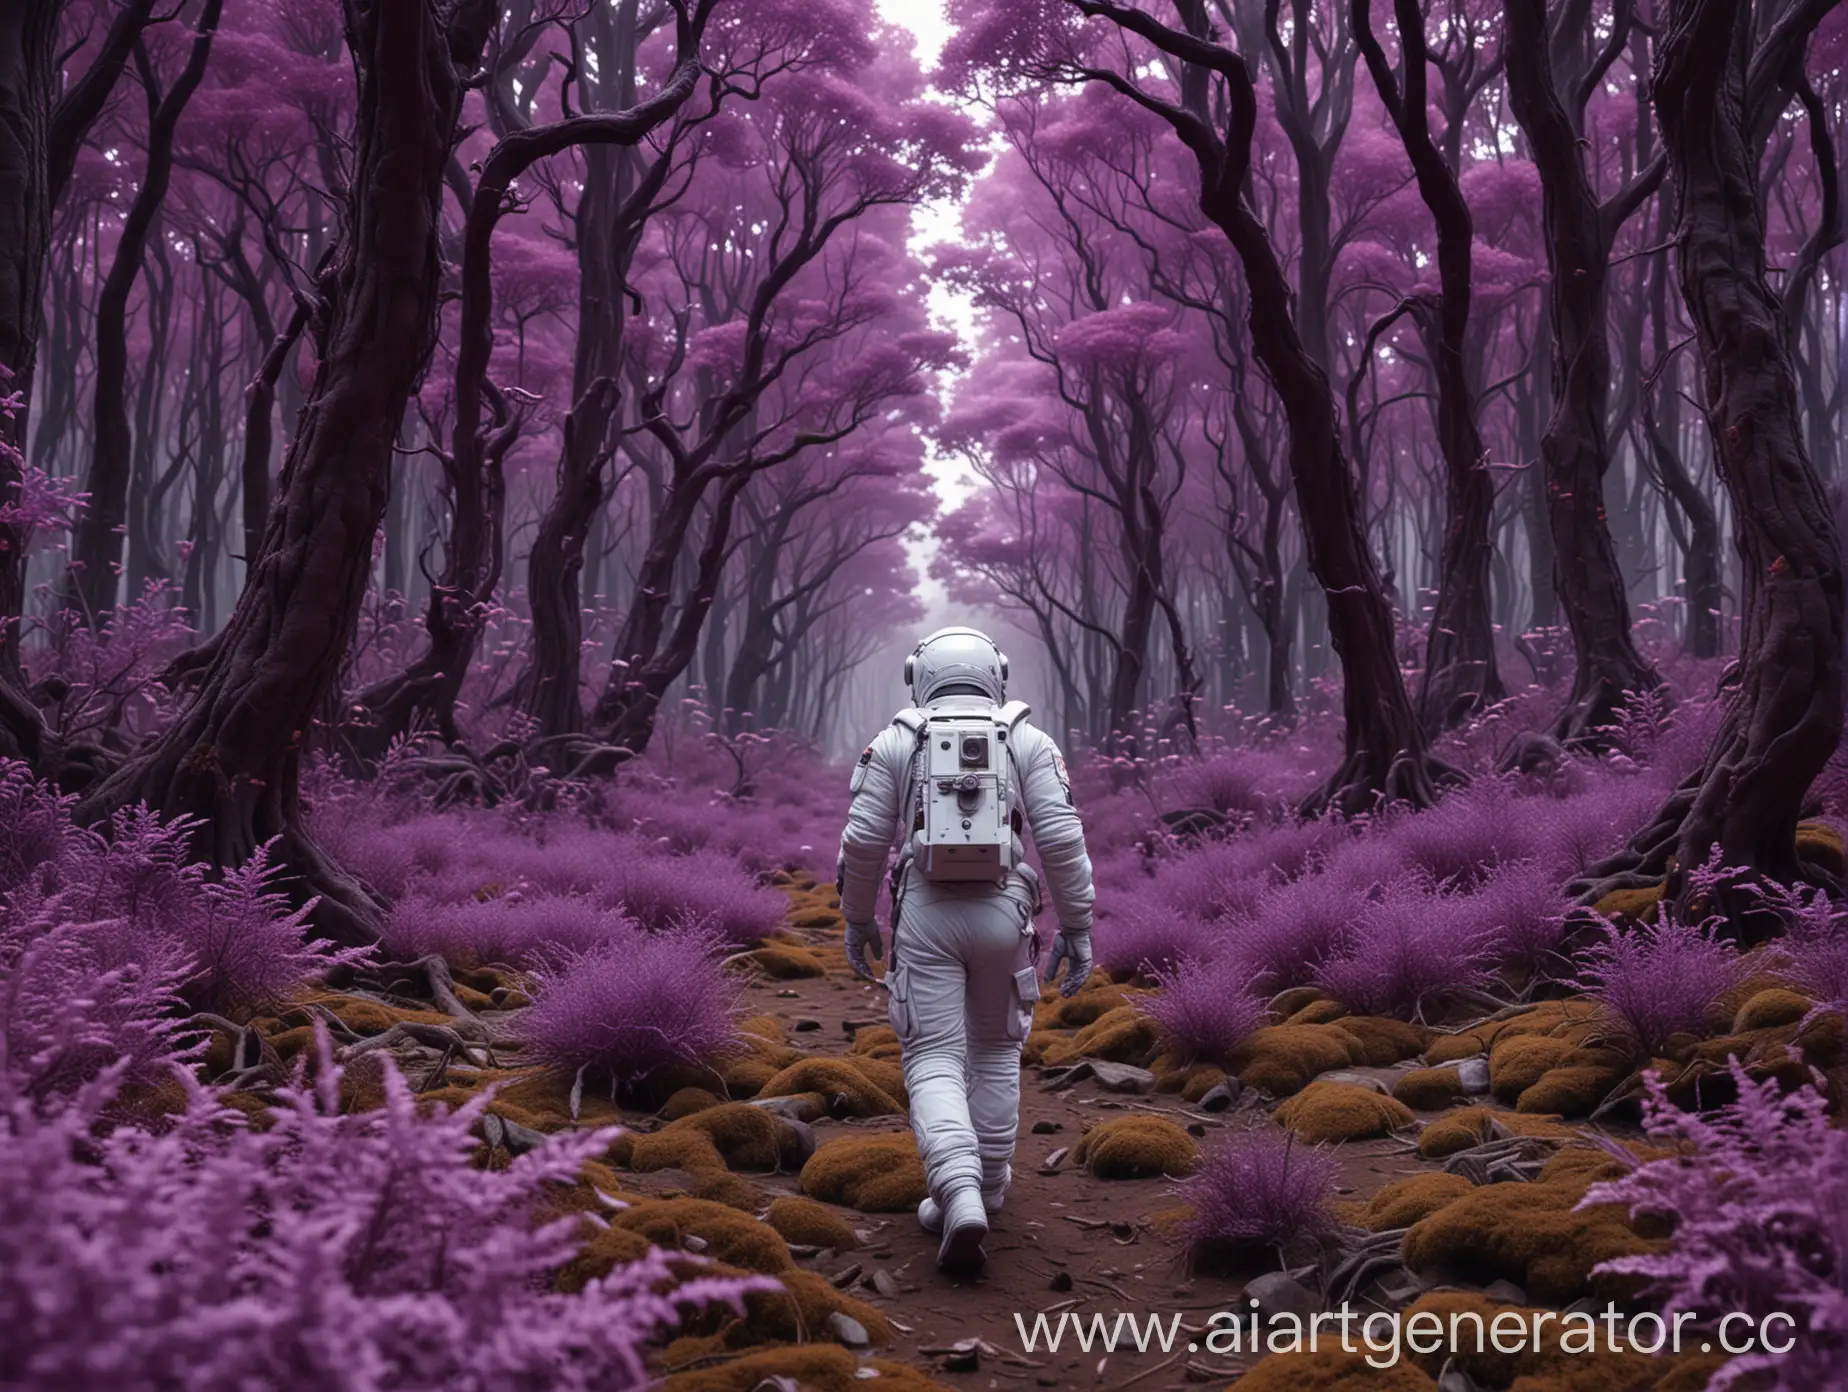 Exploring-a-Mysterious-Alien-Forest-Astronaut-Amidst-Purple-Flora-and-Strange-Creatures